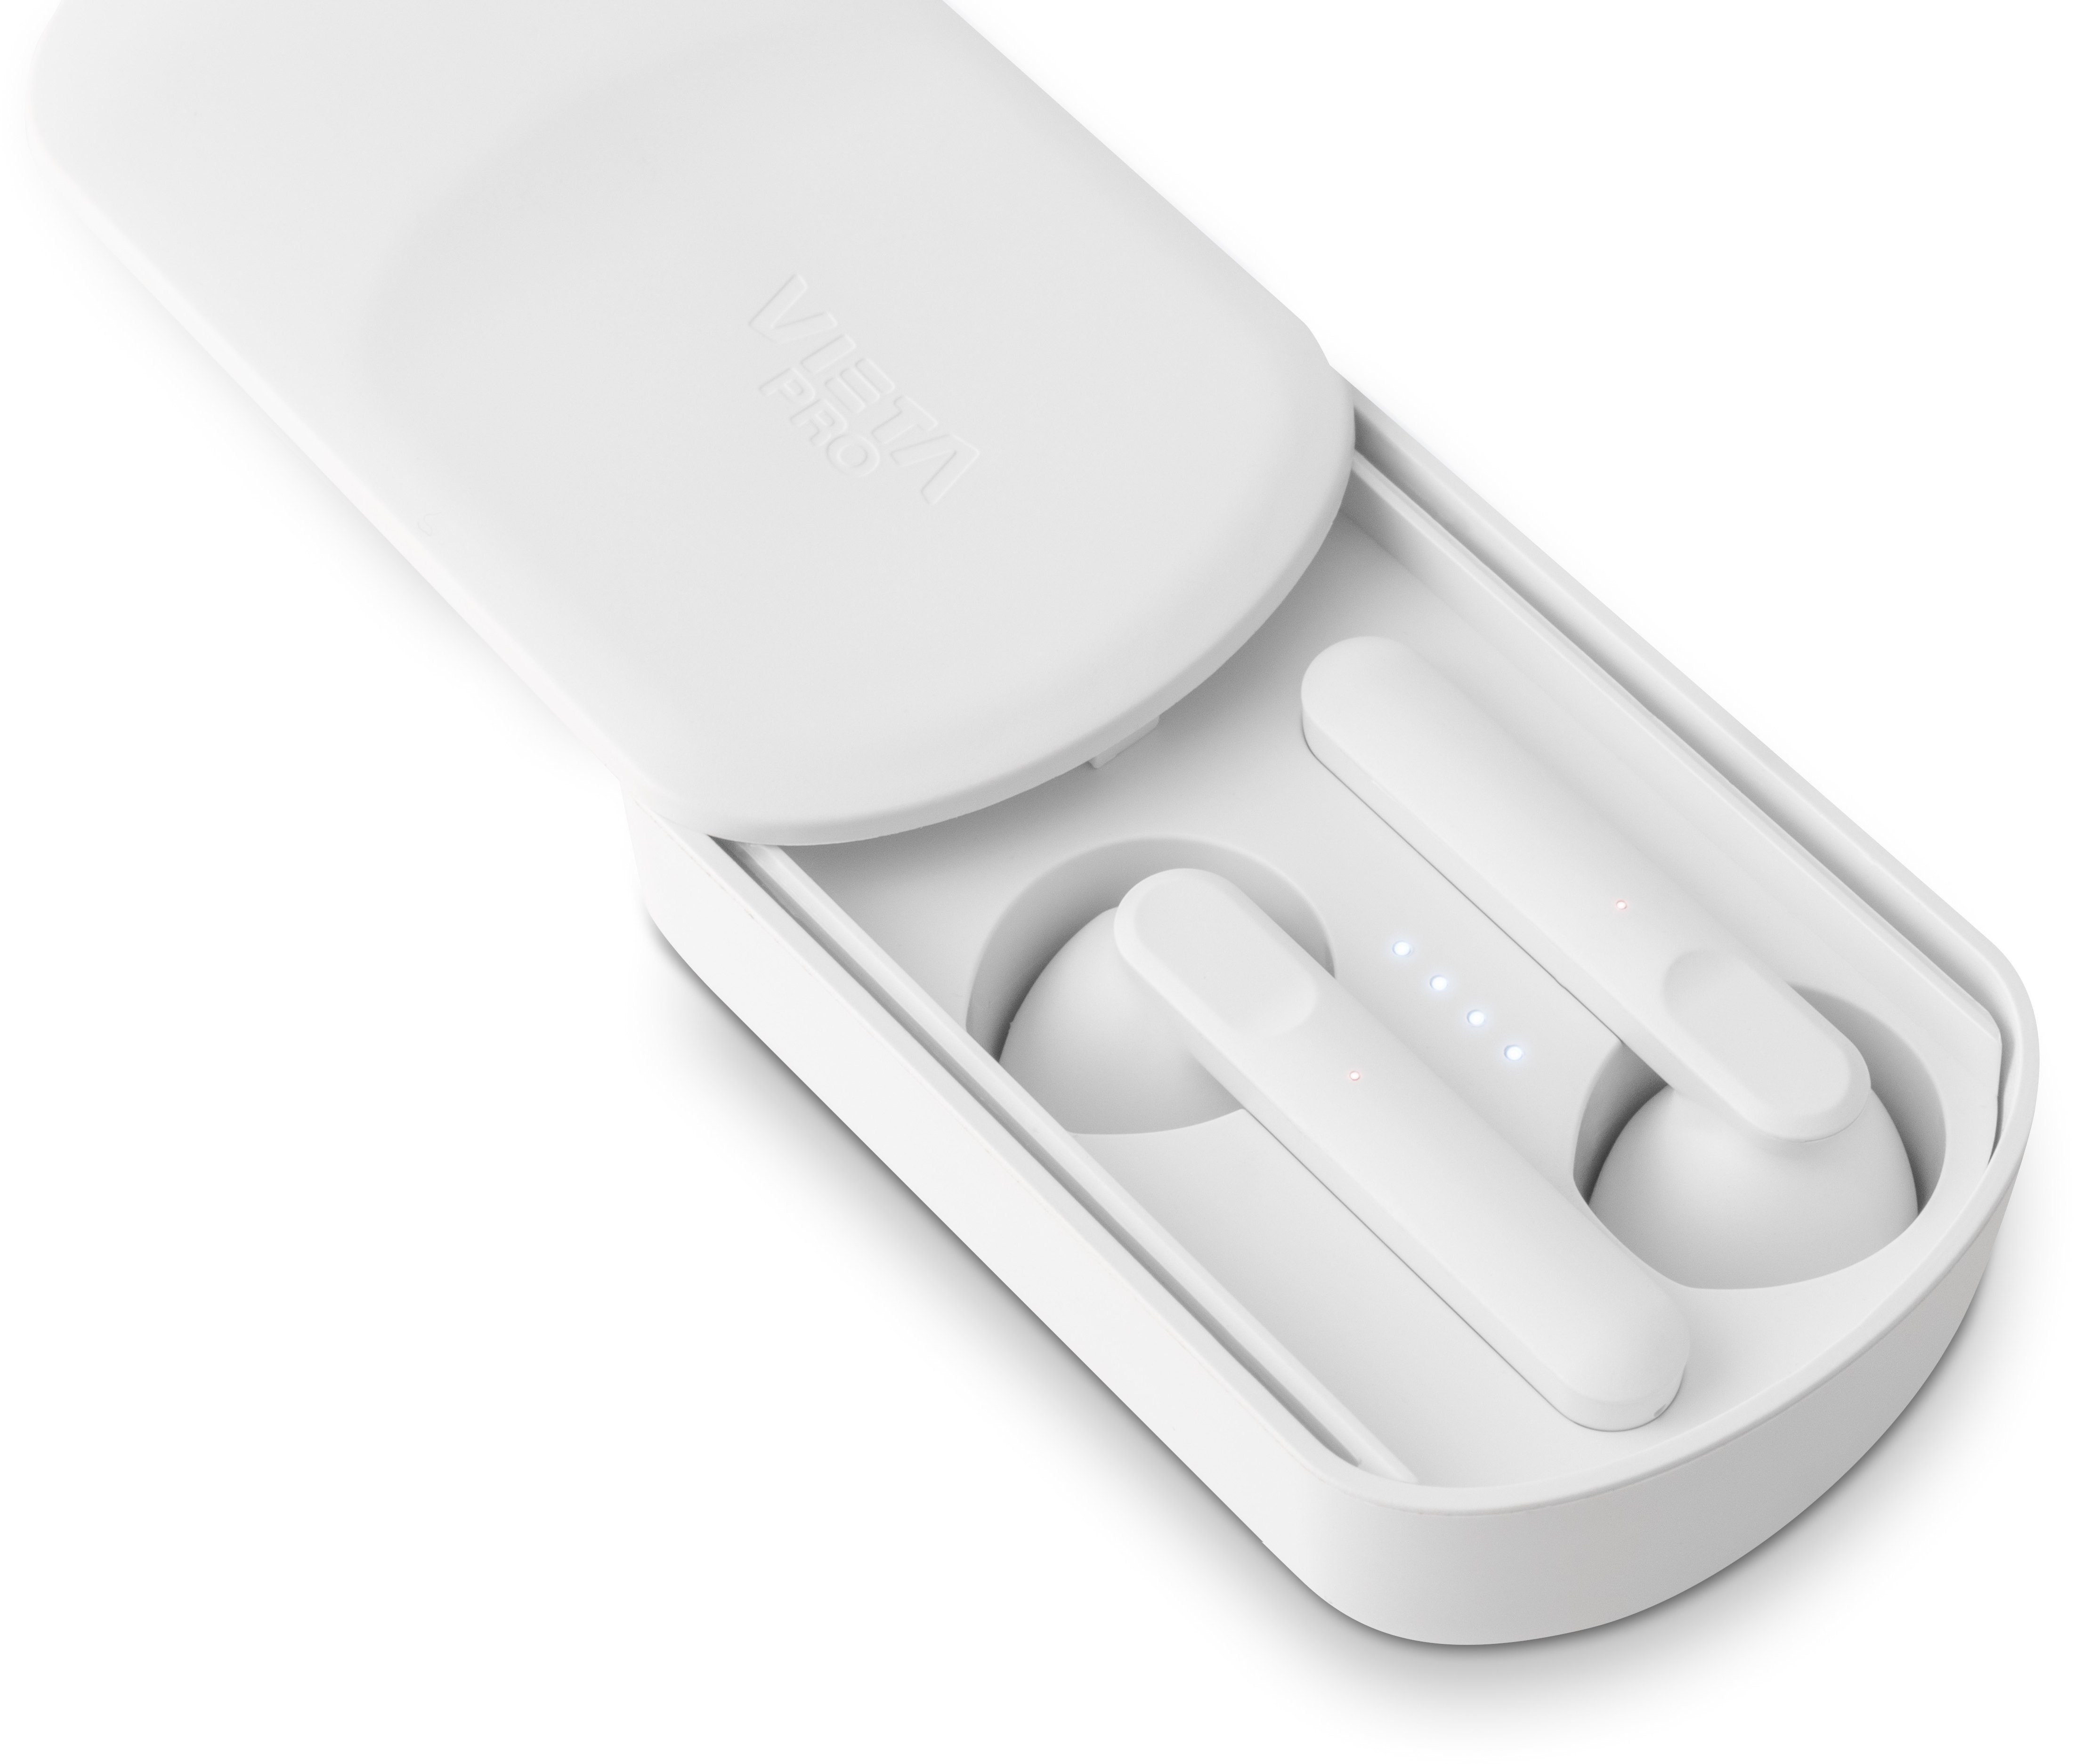 Vieta Pro #ENJOY True Kopfhörer Headphones Wireless wireless White